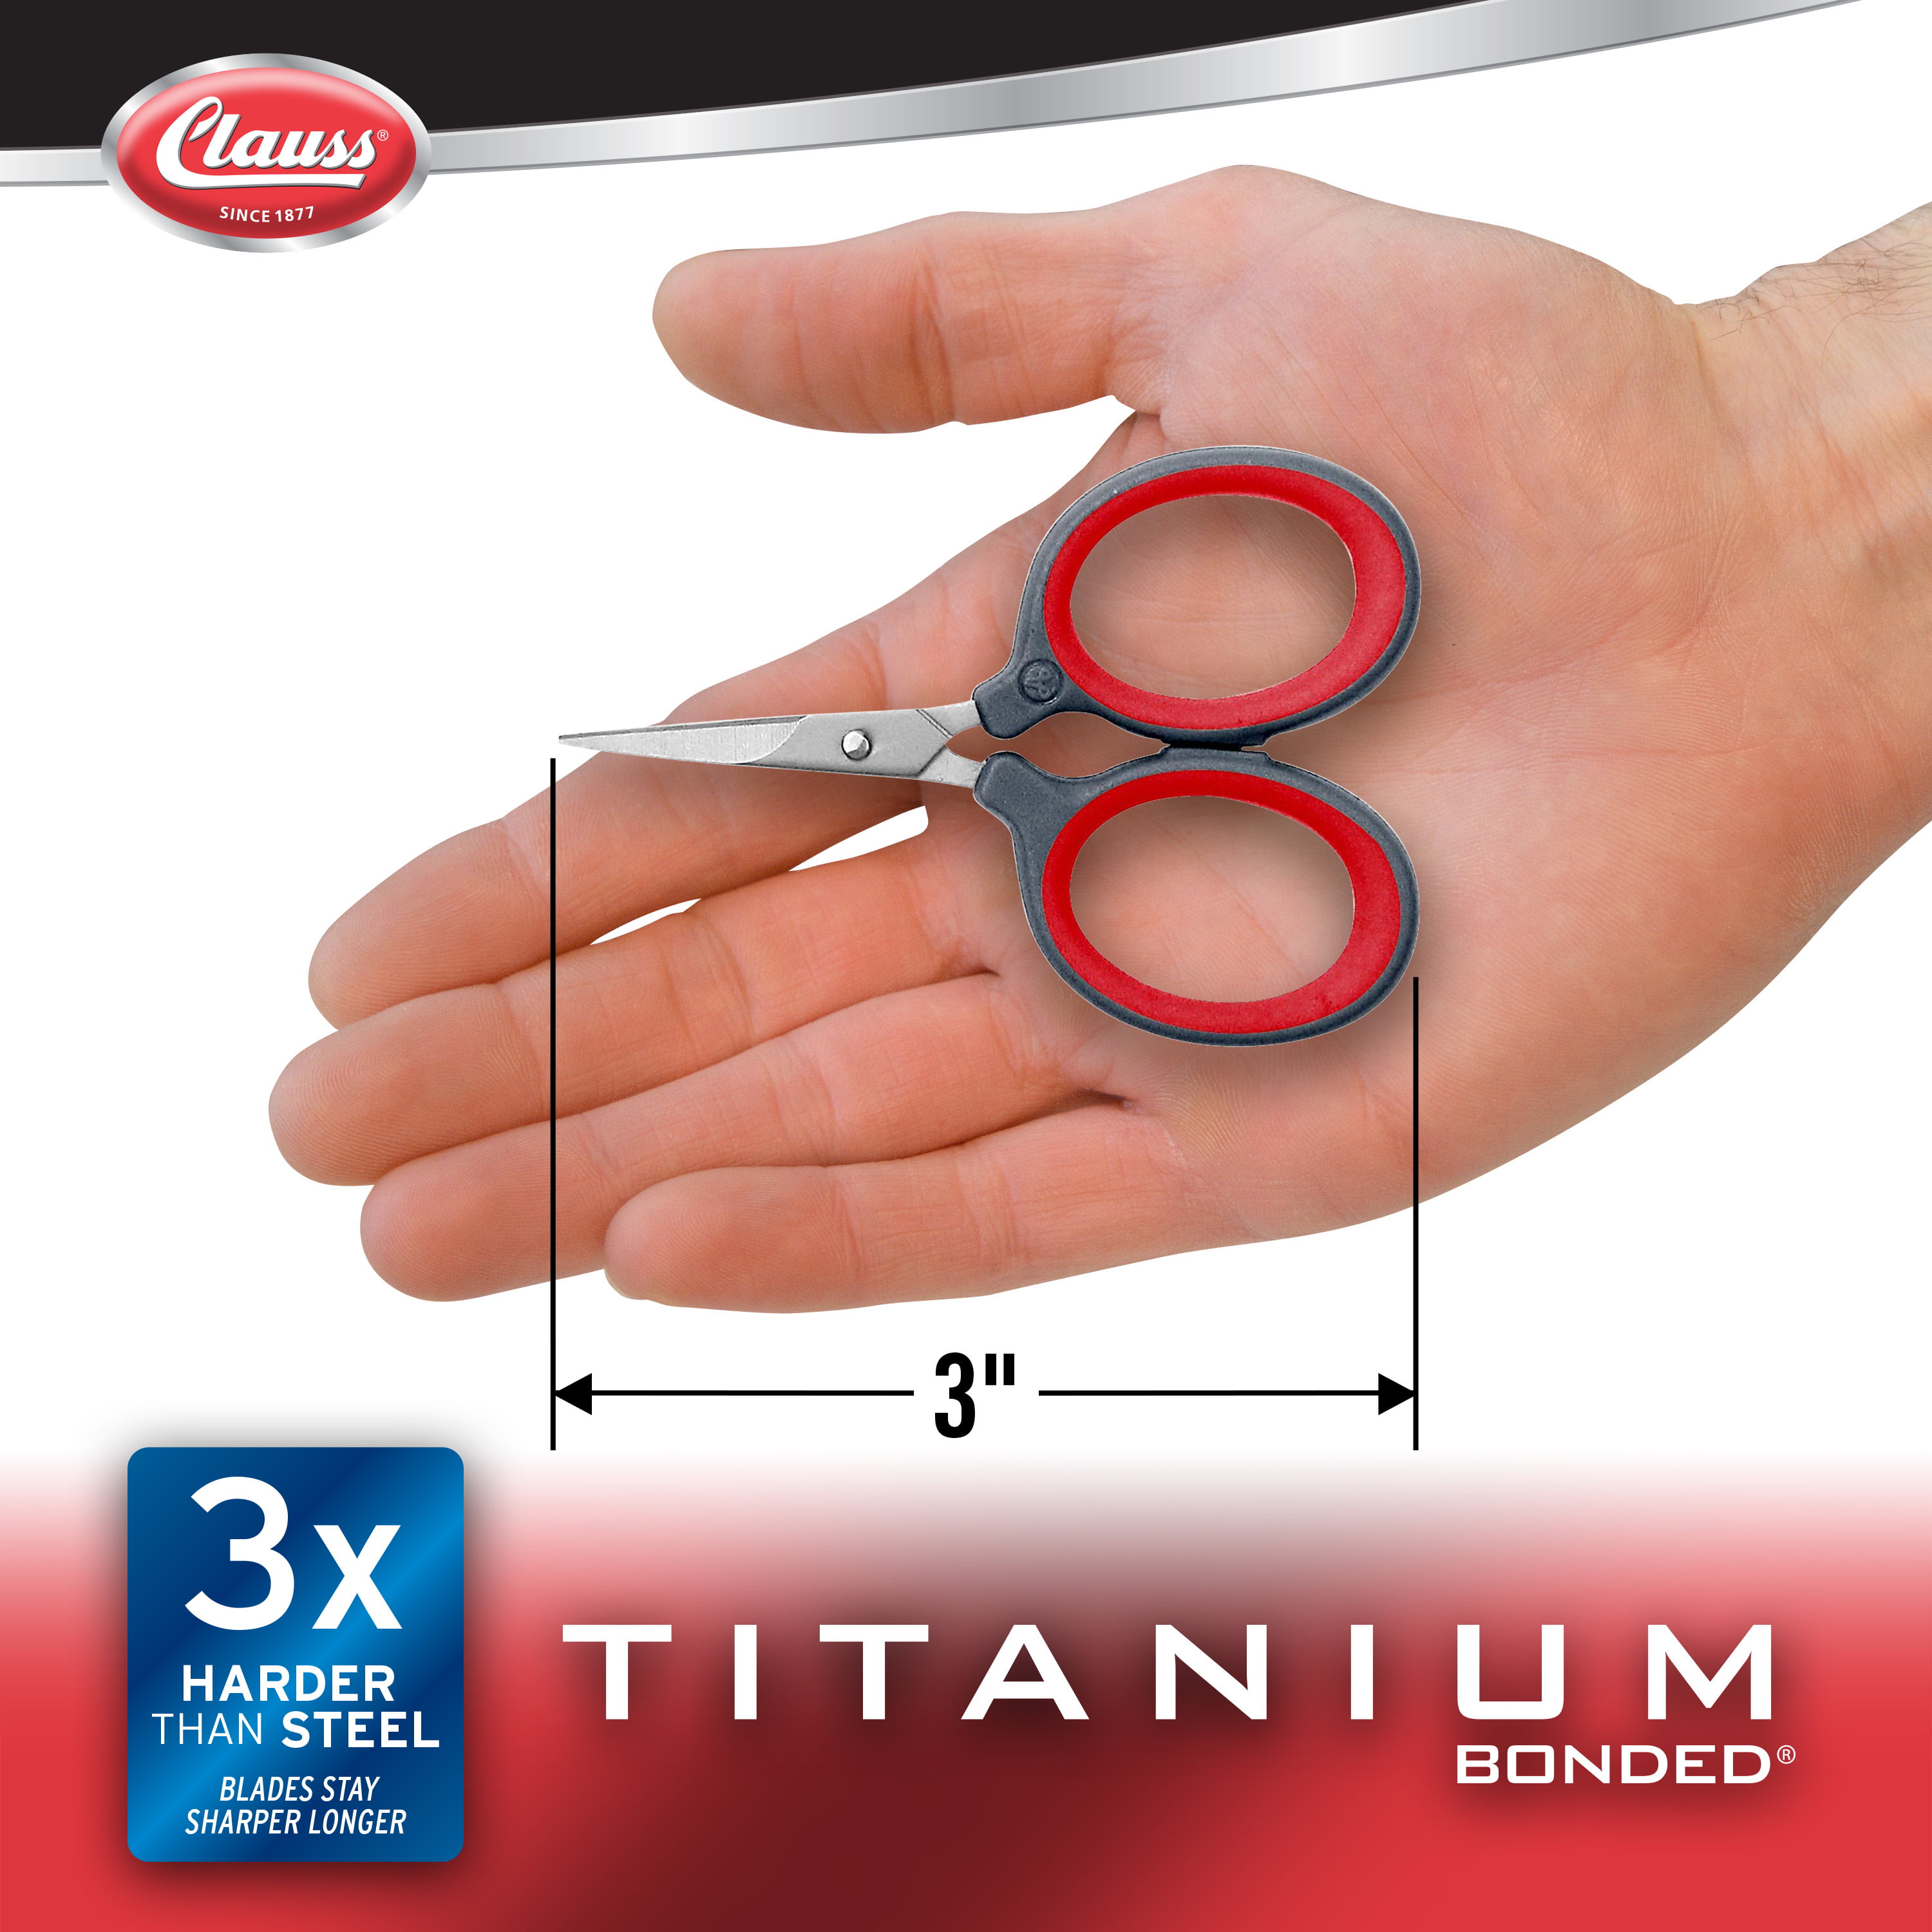 Clauss True Professional Titanium Bonded Fine Cut Scissors, 3 Blade with  Large Finger Bows